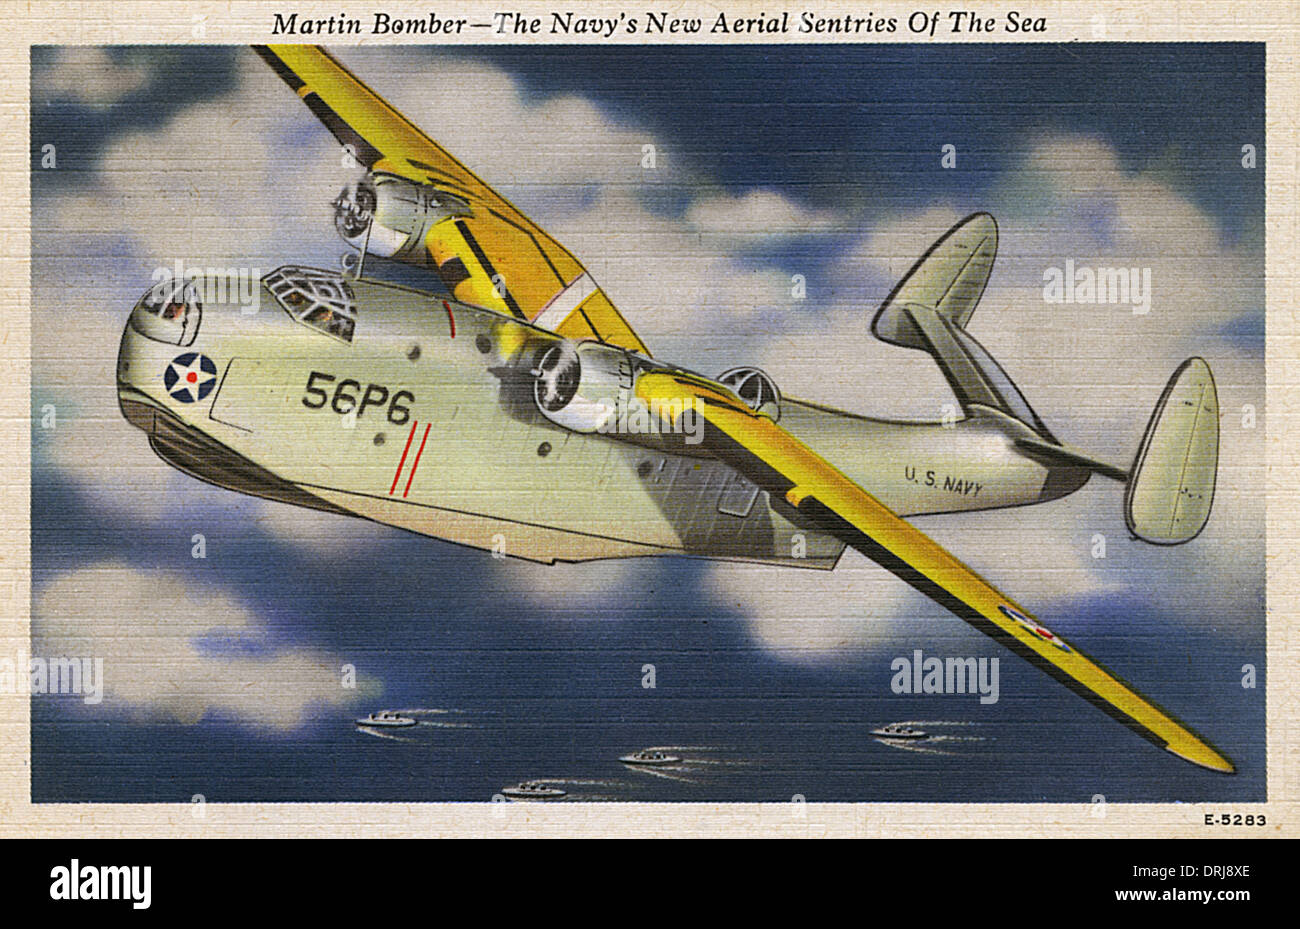 Martin Bomber - US Navy's New Aerial Sentries of the Sea Stock Photo